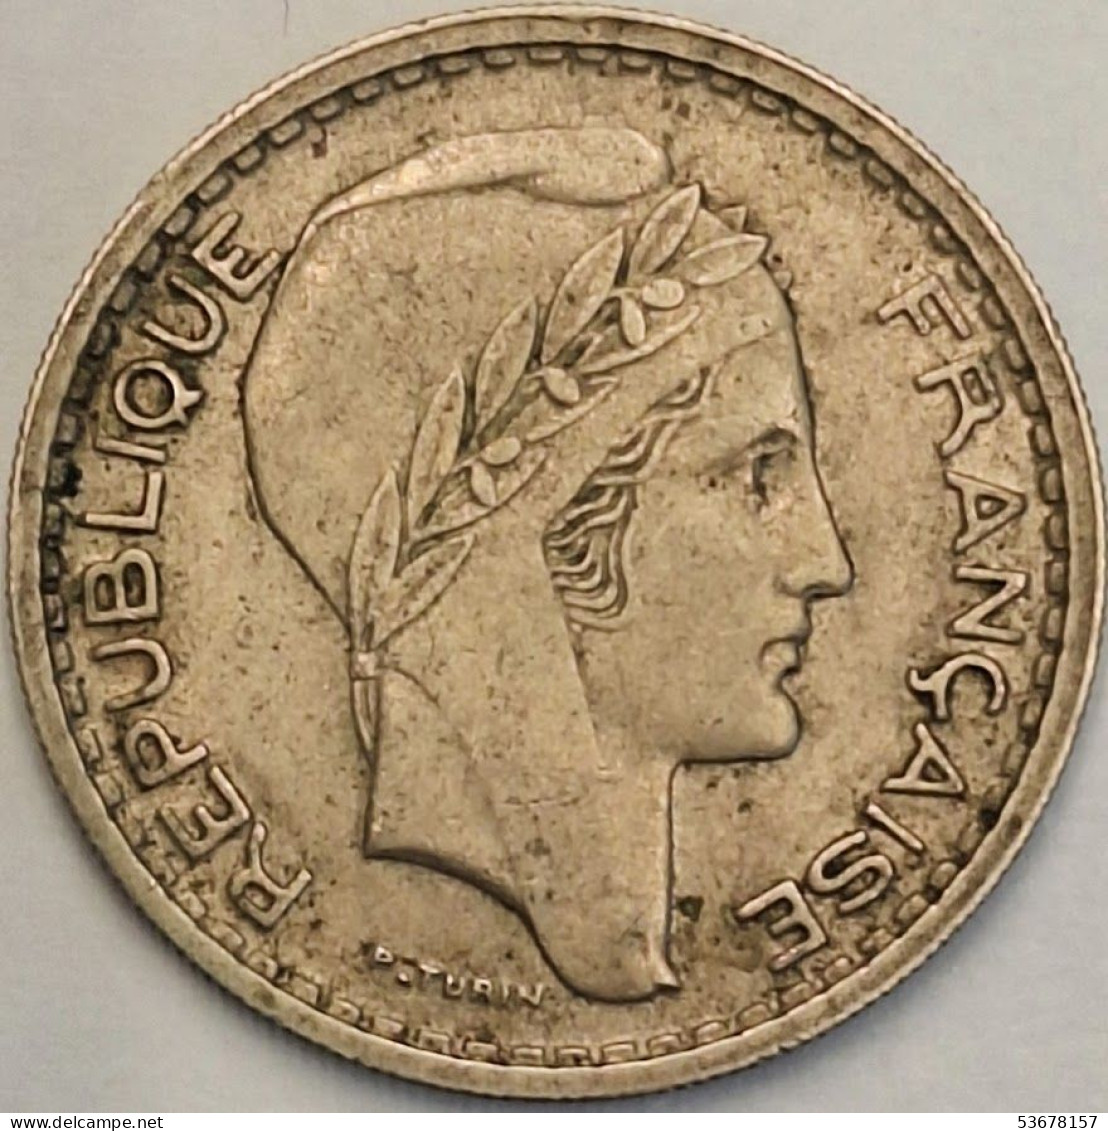 France - 10 Francs 1949 B, KM# 909.2 (#4140) - 10 Francs